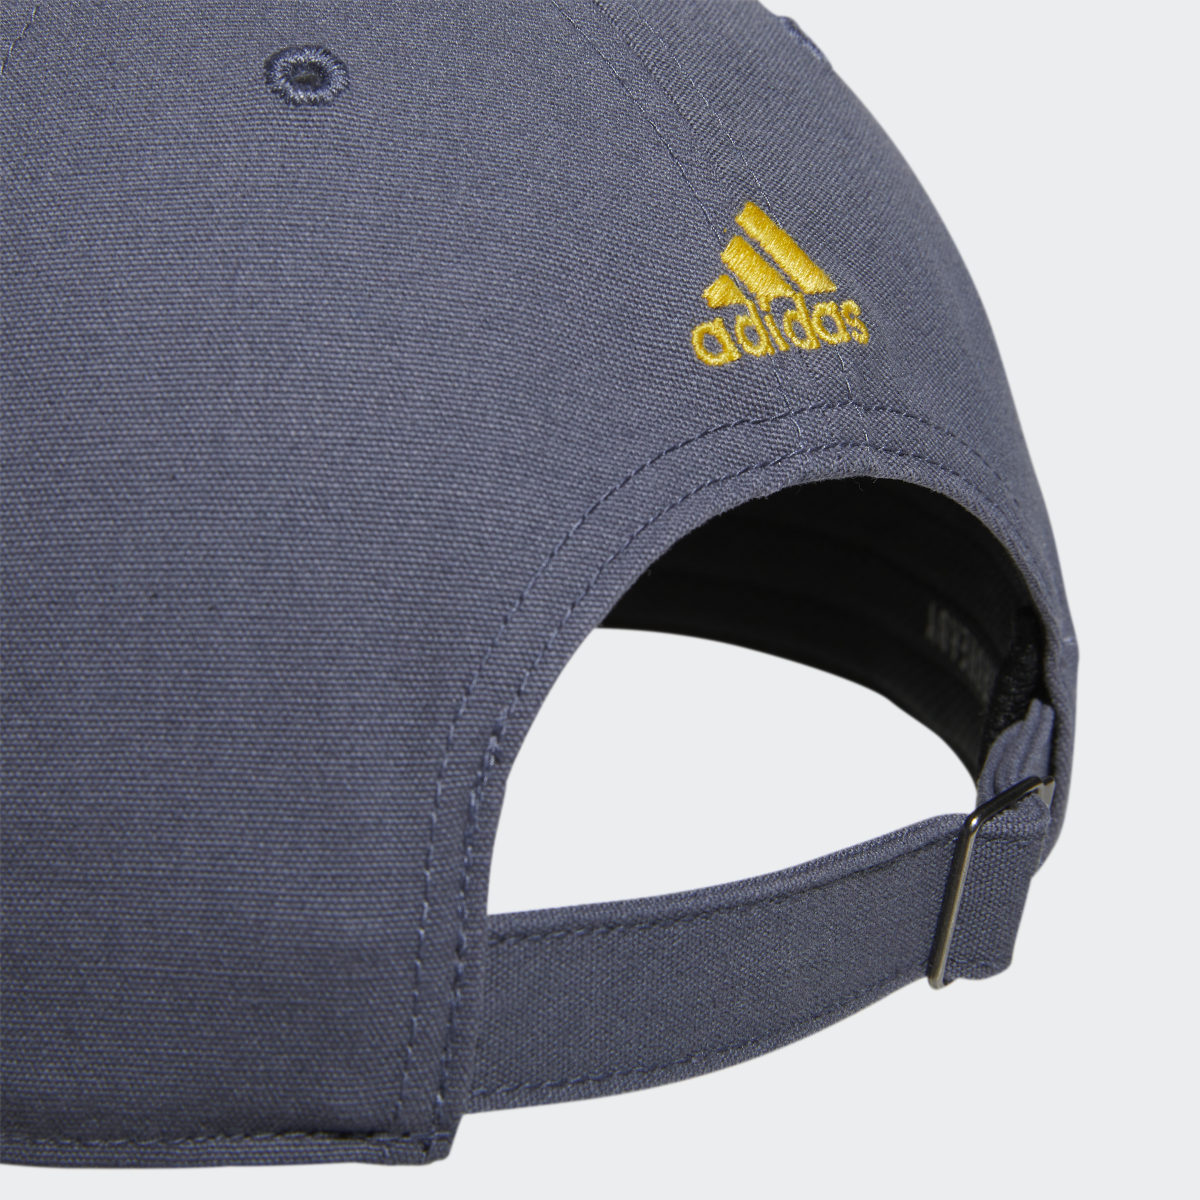 Adidas Ultimate Hat. 7